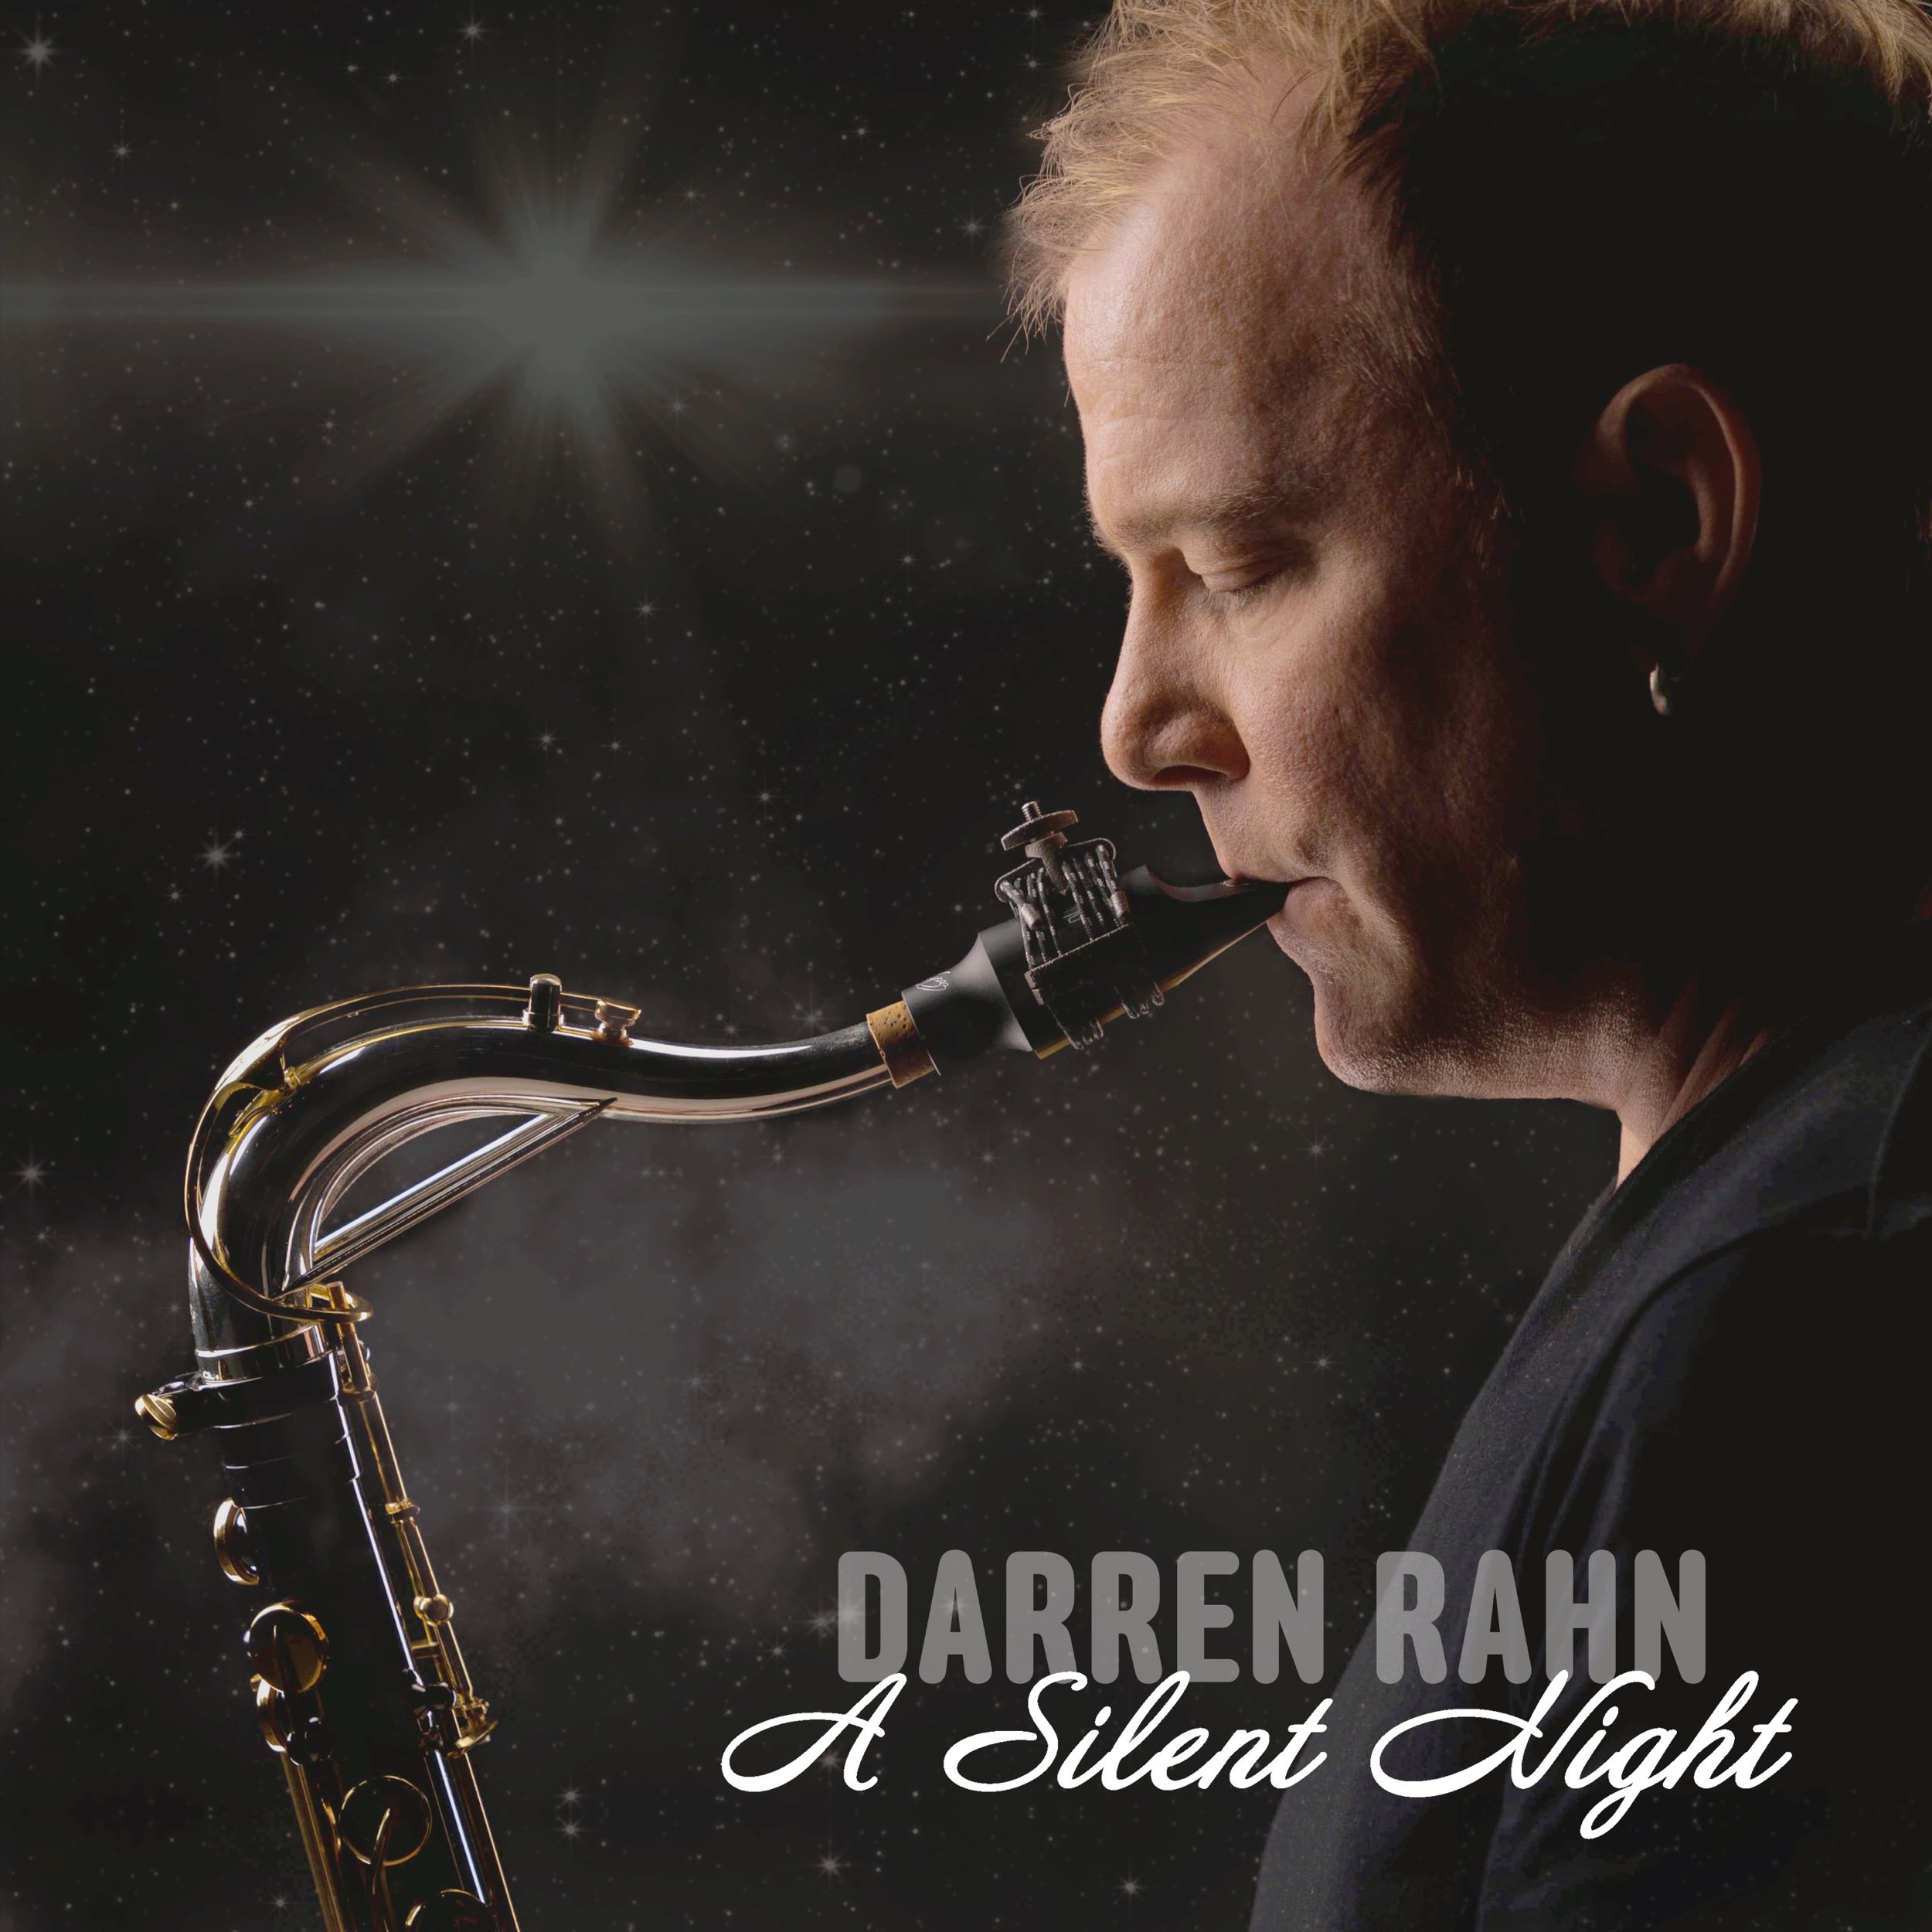 Darren Rahn “A Silent Night” Single